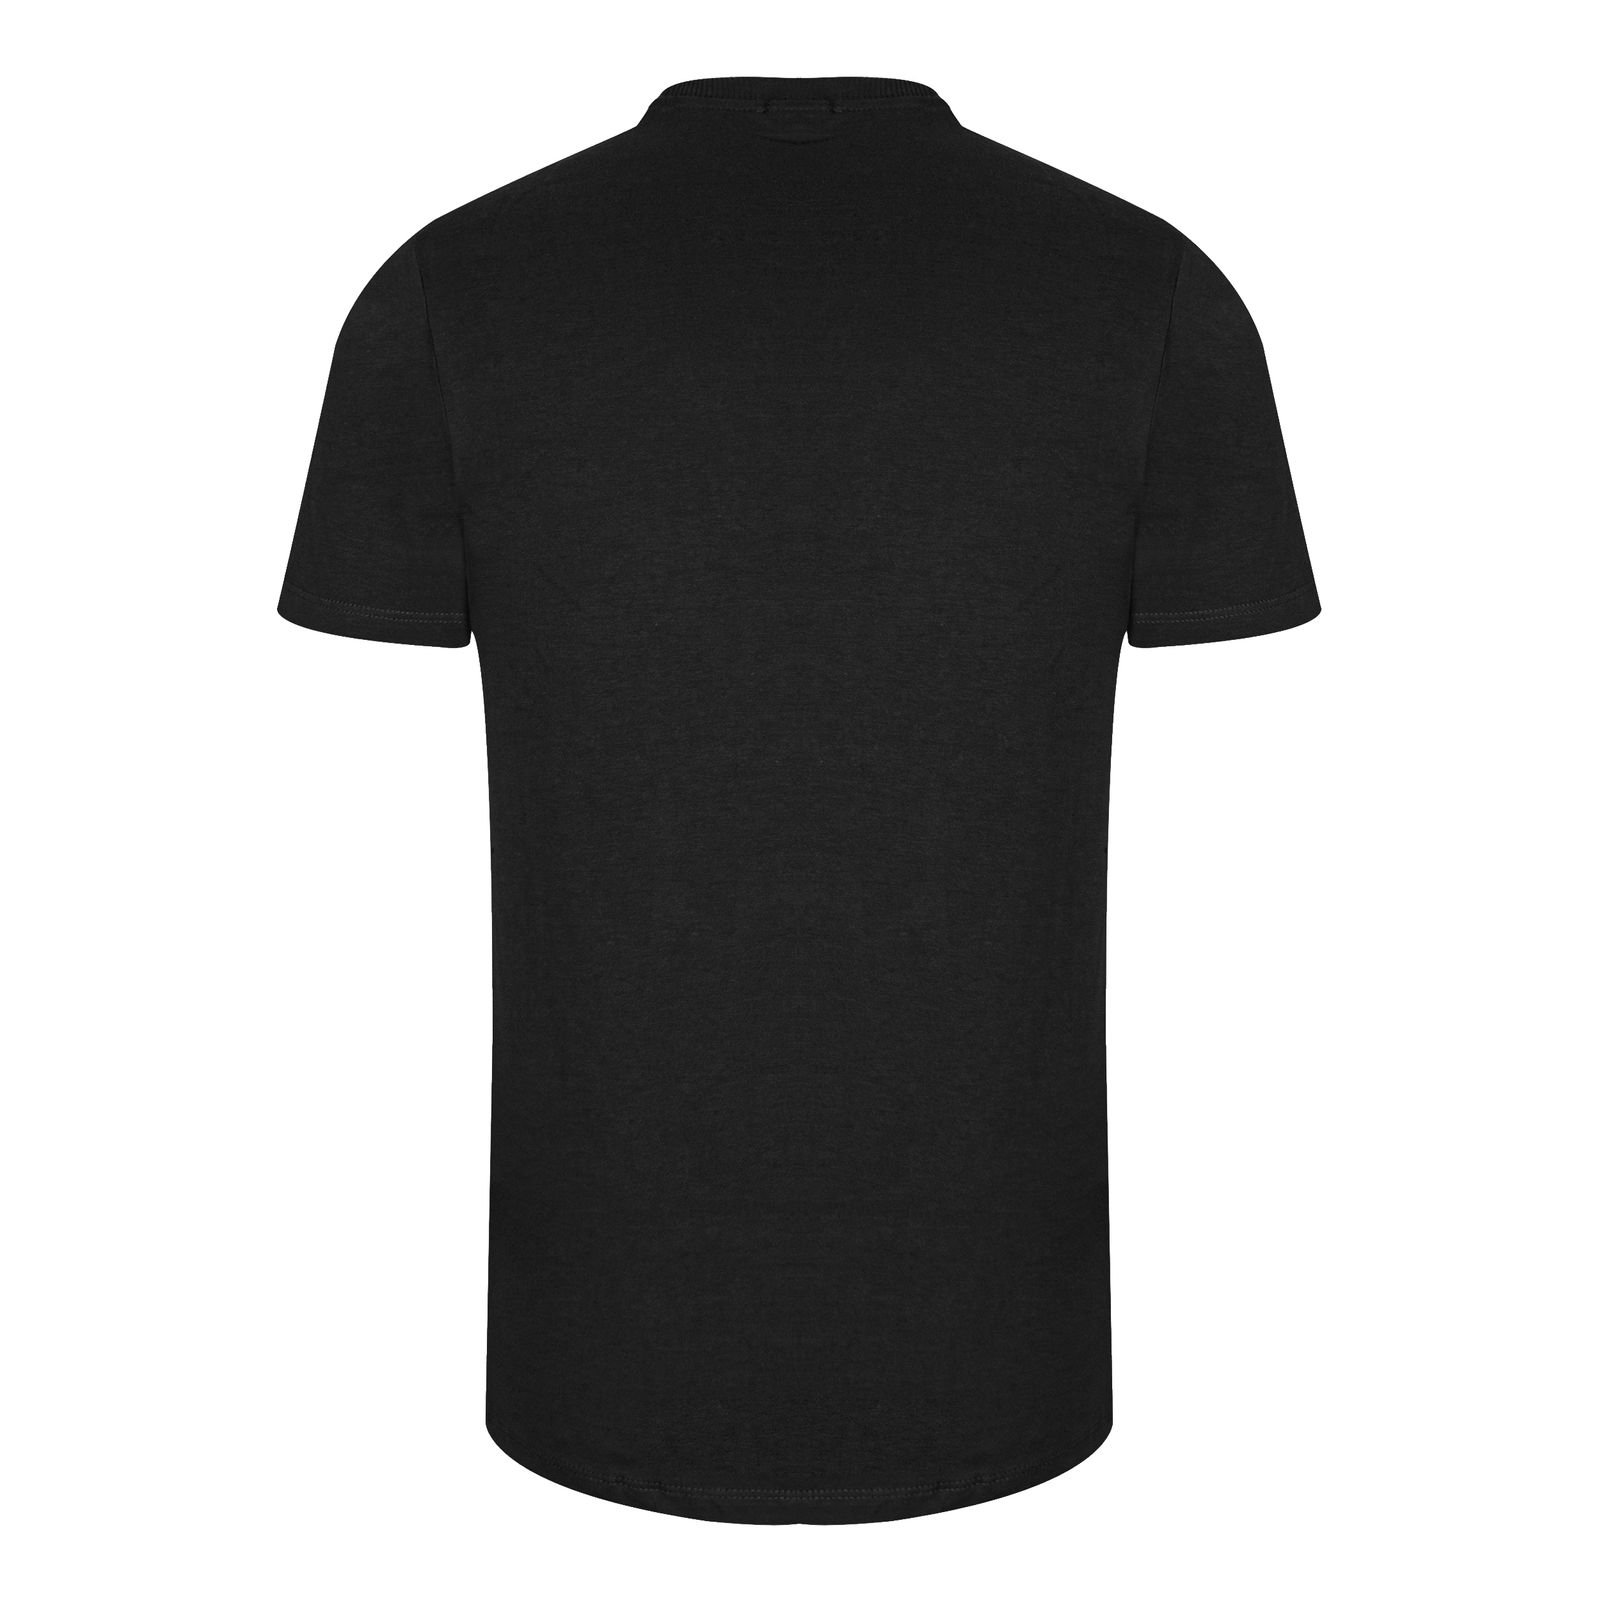 تی شرت آستین کوتاه مردانه ناوالس مدل سایز بزرگ OCEAN S.S TEES رنگ مشکی -  - 2